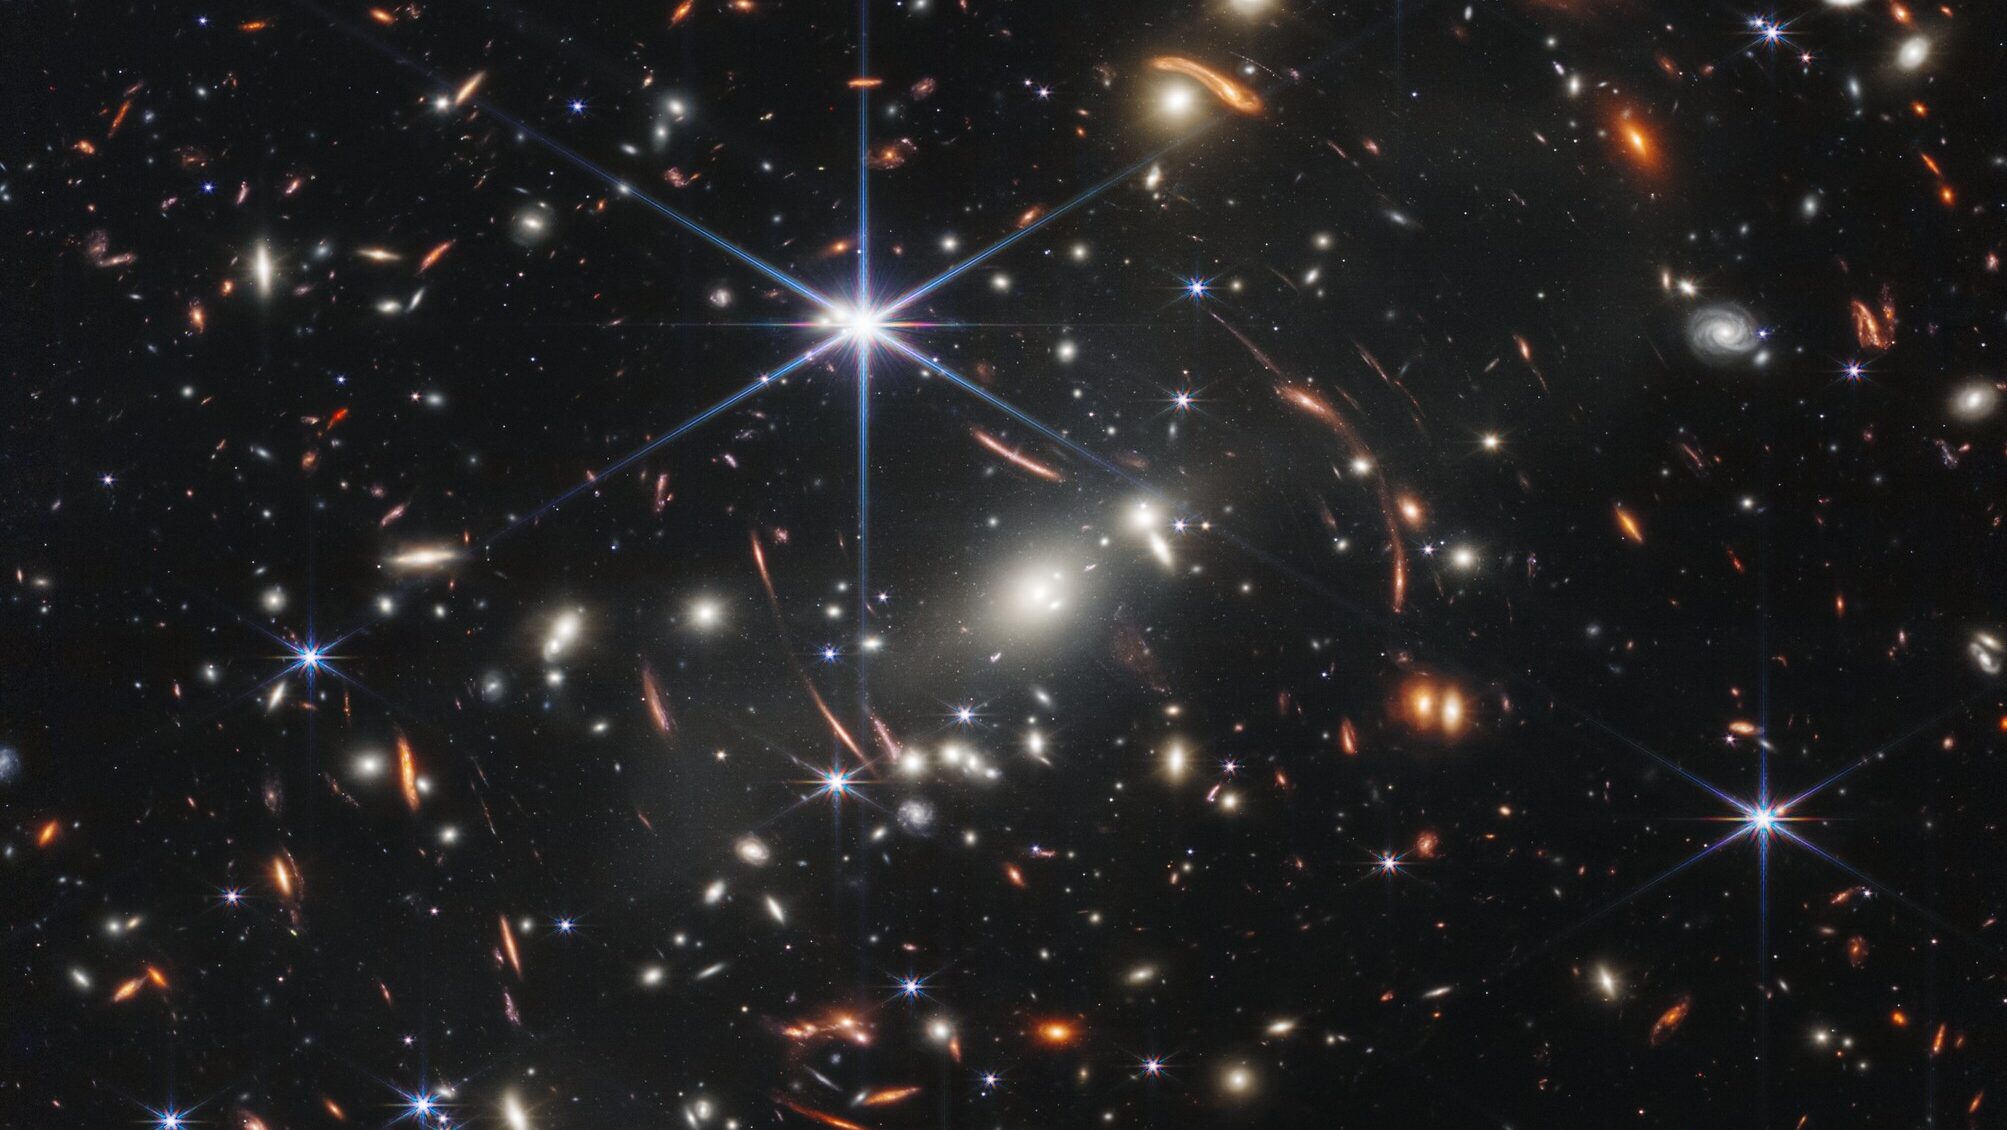 Universe of Galaxies James Webb Space Telescope, NASA